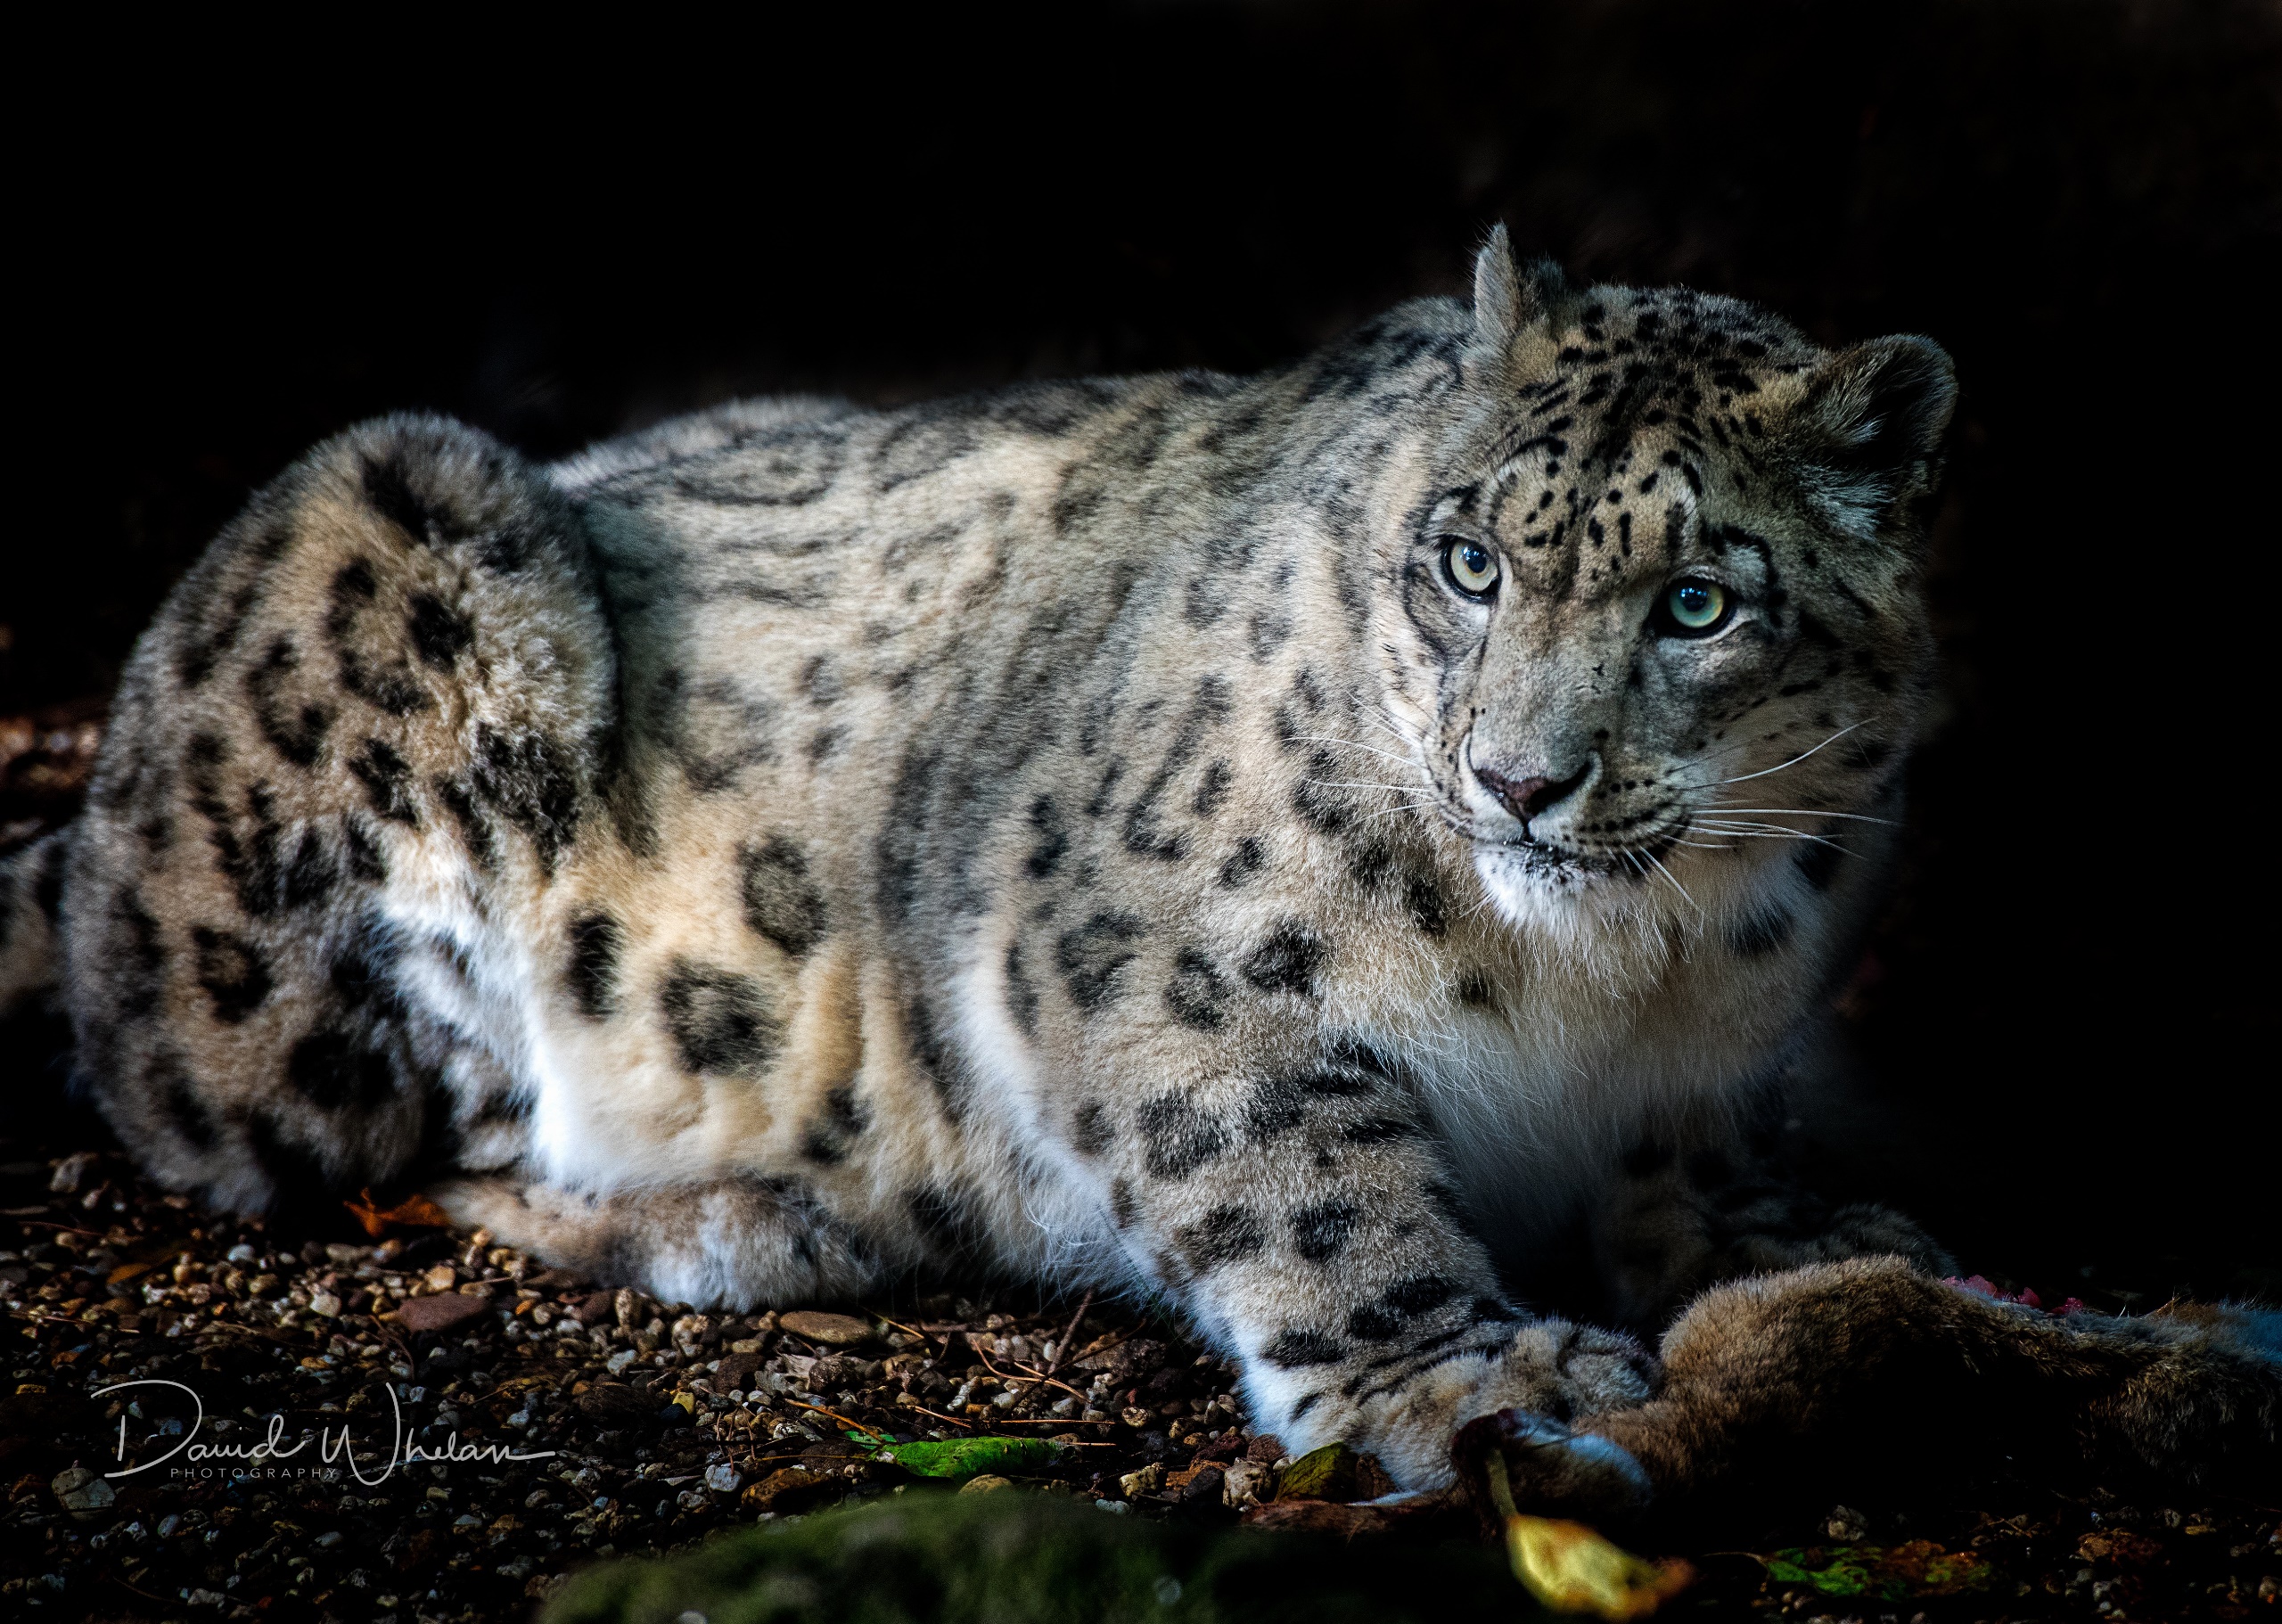 General 2560x1822 big cats mammals animals snow leopards closeup watermarked